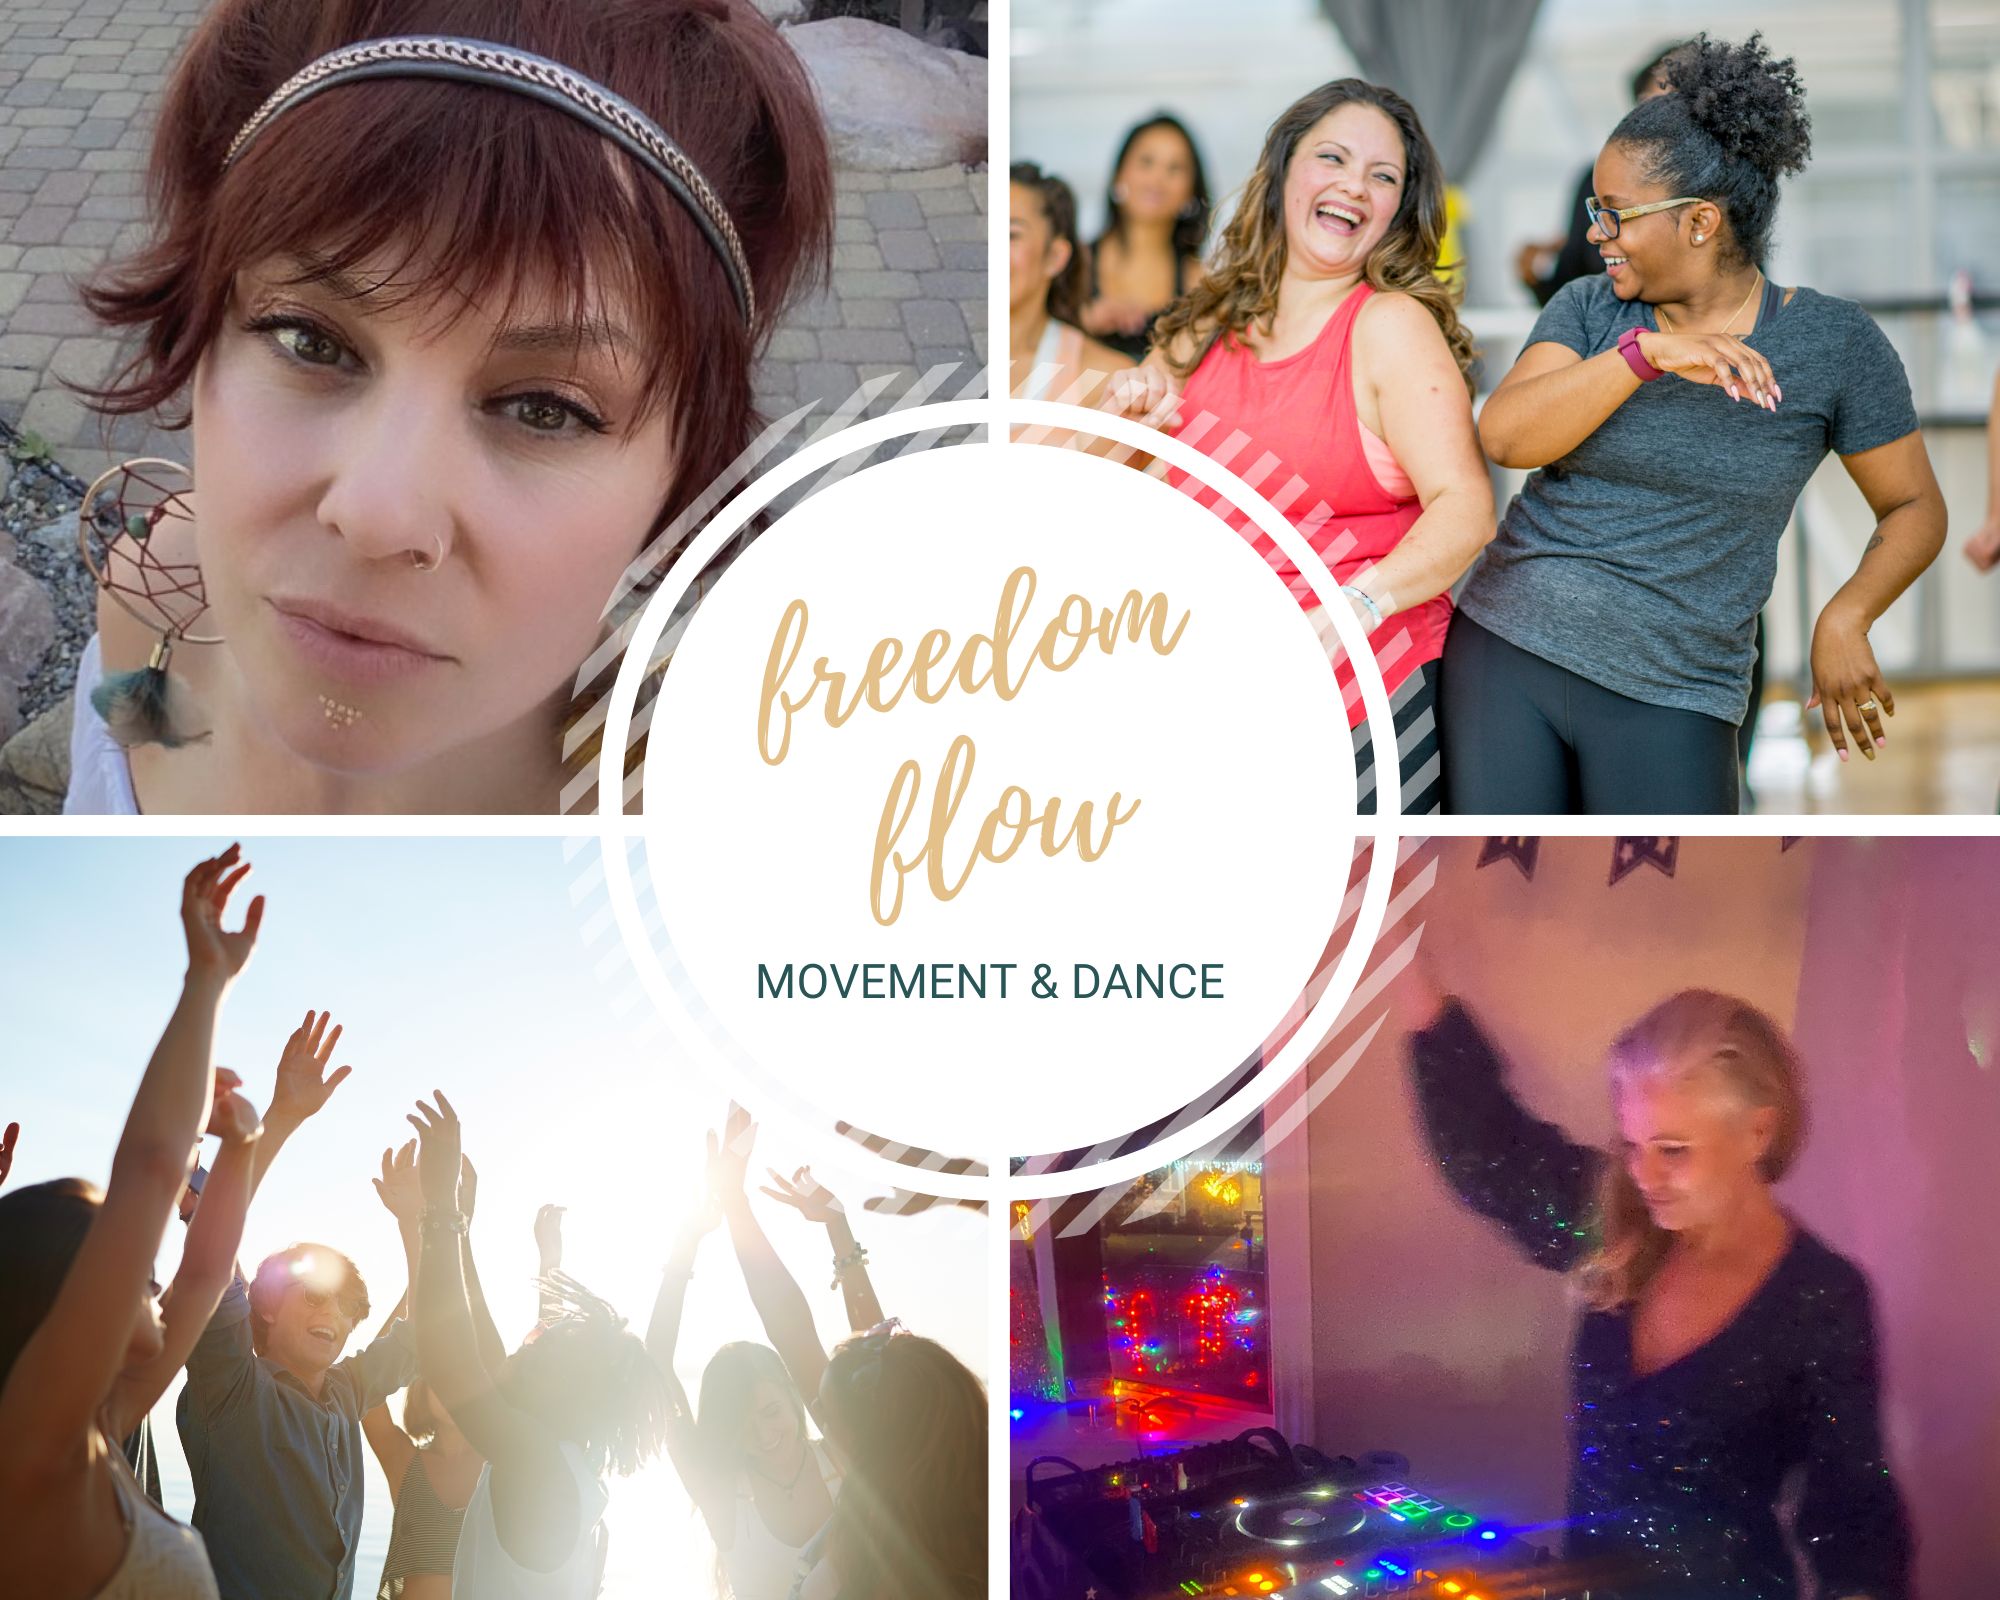 3/16 (Sat) – Freedom Flow: Dance & Movement w/ Laura Berry